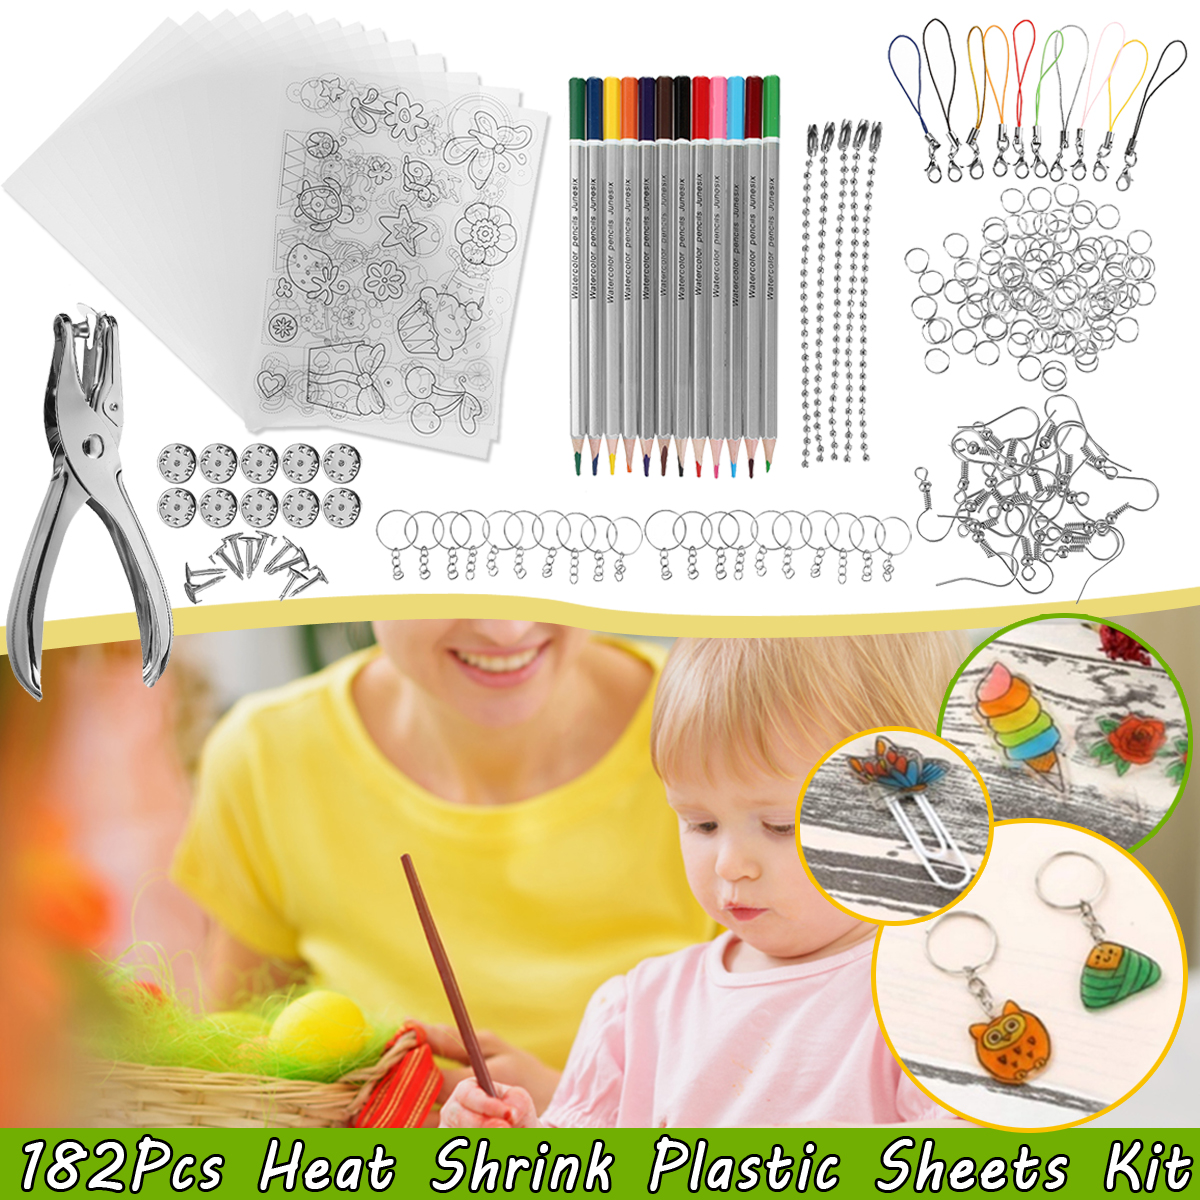 182Pcs-Heat-Shrink-Plastic-Sheets-Kit-Shrinky-Art-Paper-Hole-Punch-Keychains-DIY-1694895-1